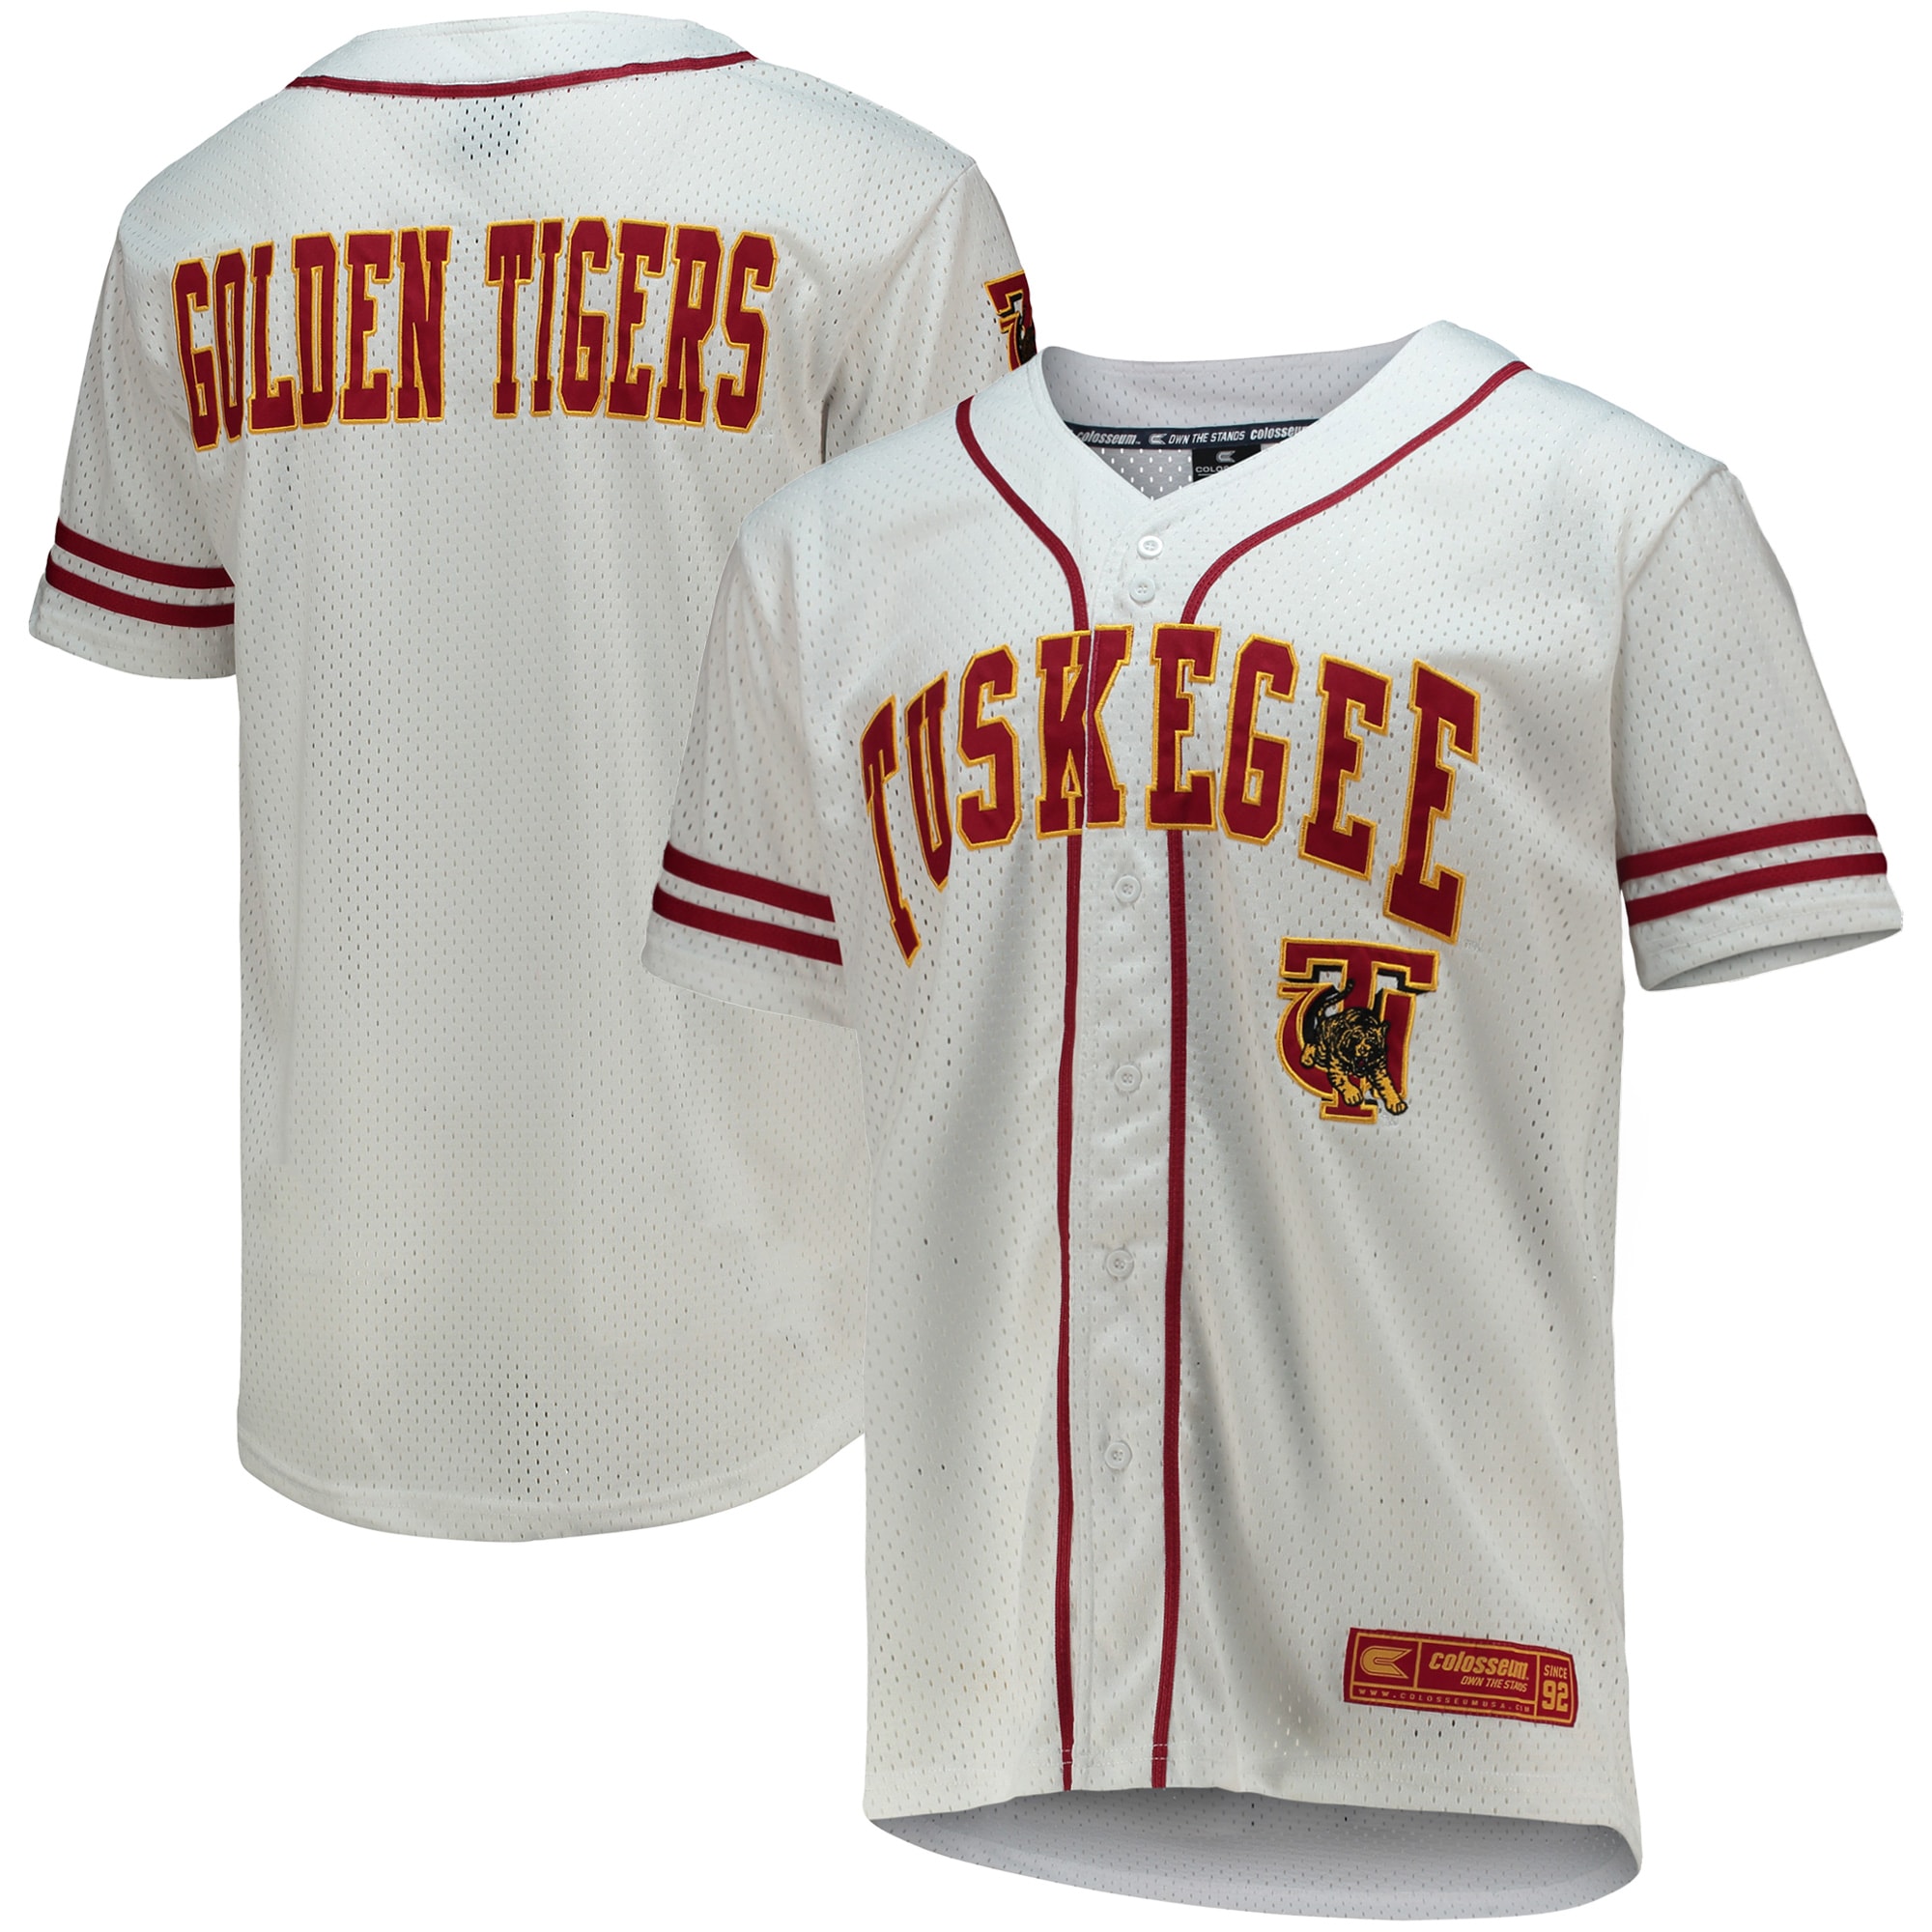 Tuskegee Golden Tigers Colosseum Free Spirited Baseball Jersey - Whitecrimson For Youth Women Men